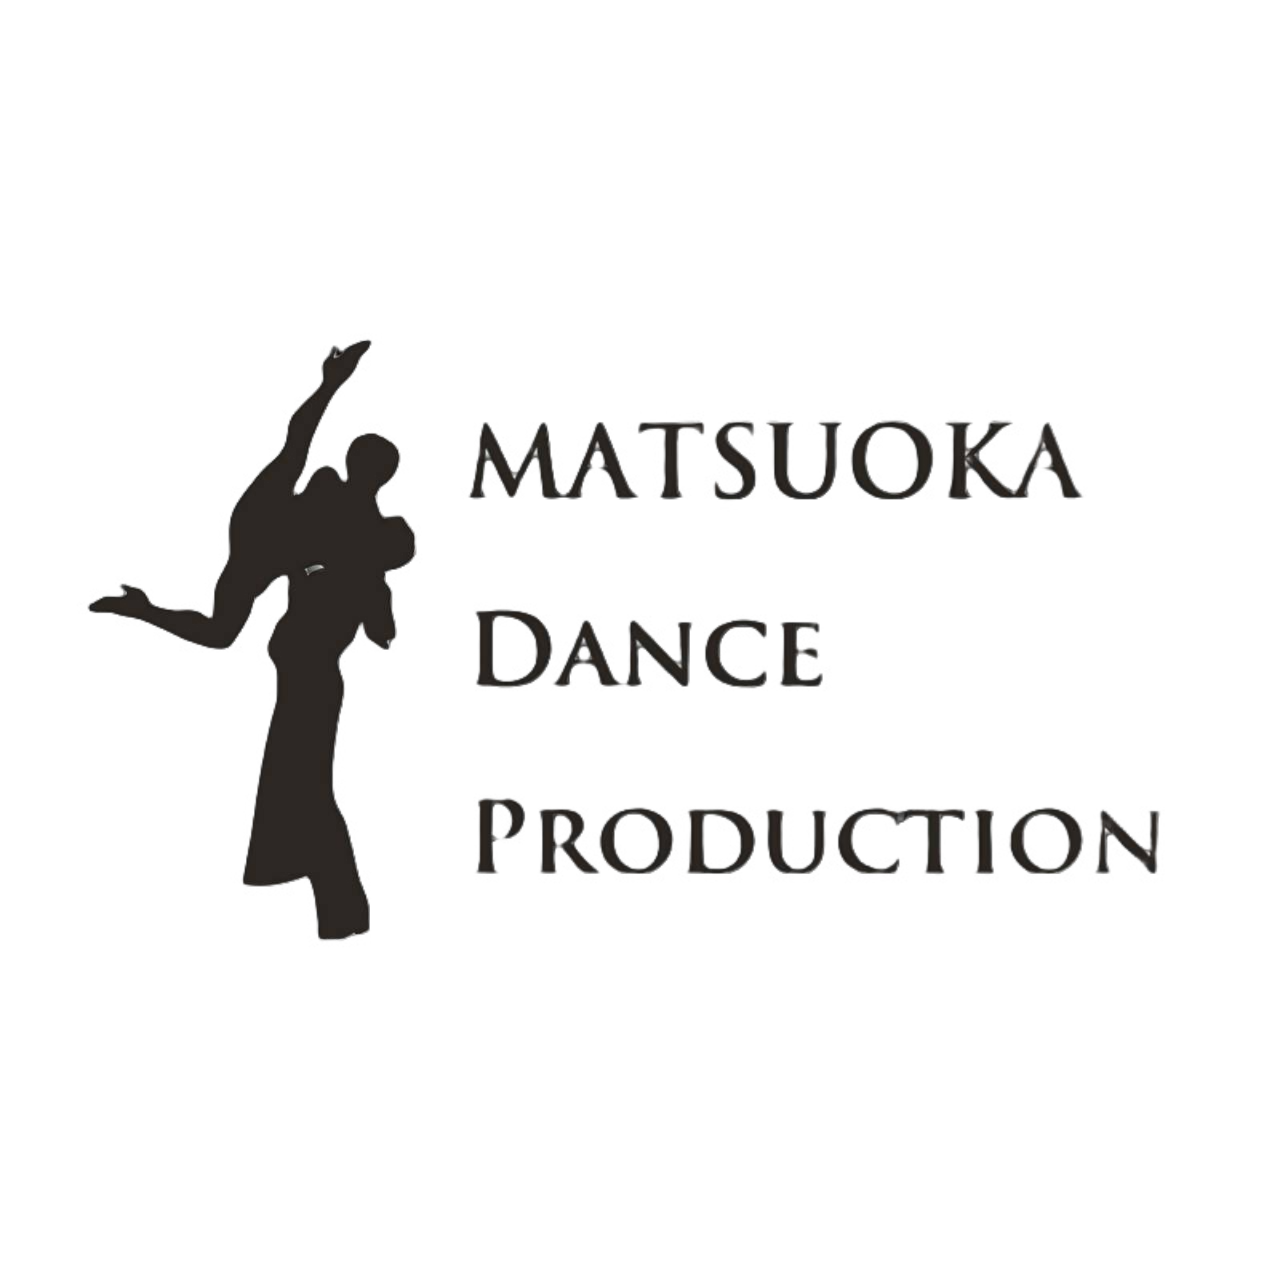 Matsuoka Dance Production